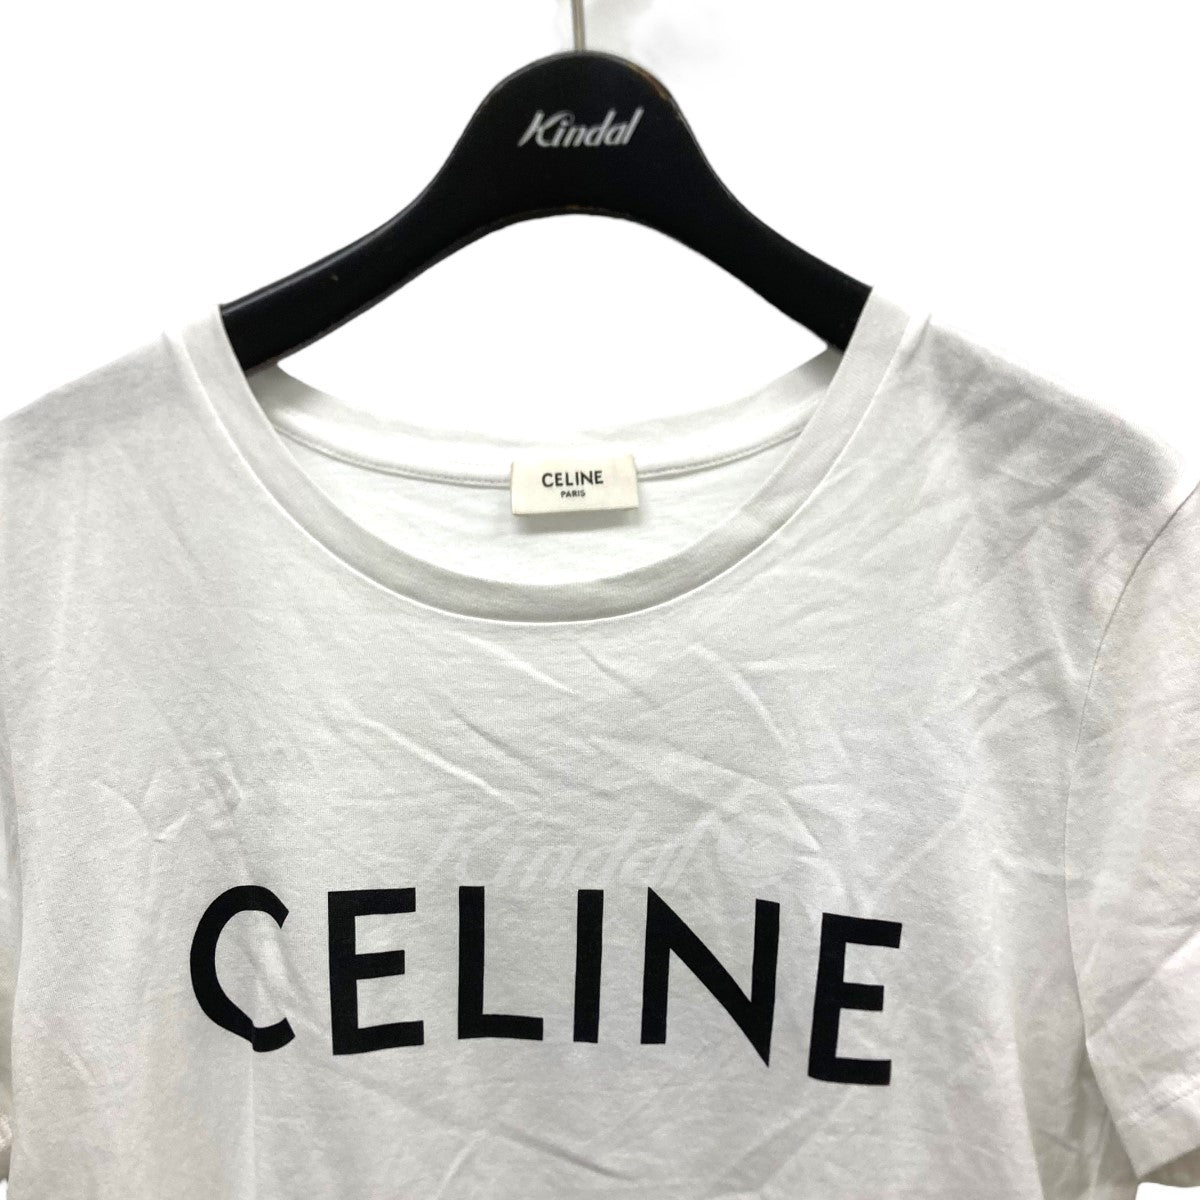 CELINE(セリーヌ) プリントTシャツ 2X314916G 2X314916G ホワイト 